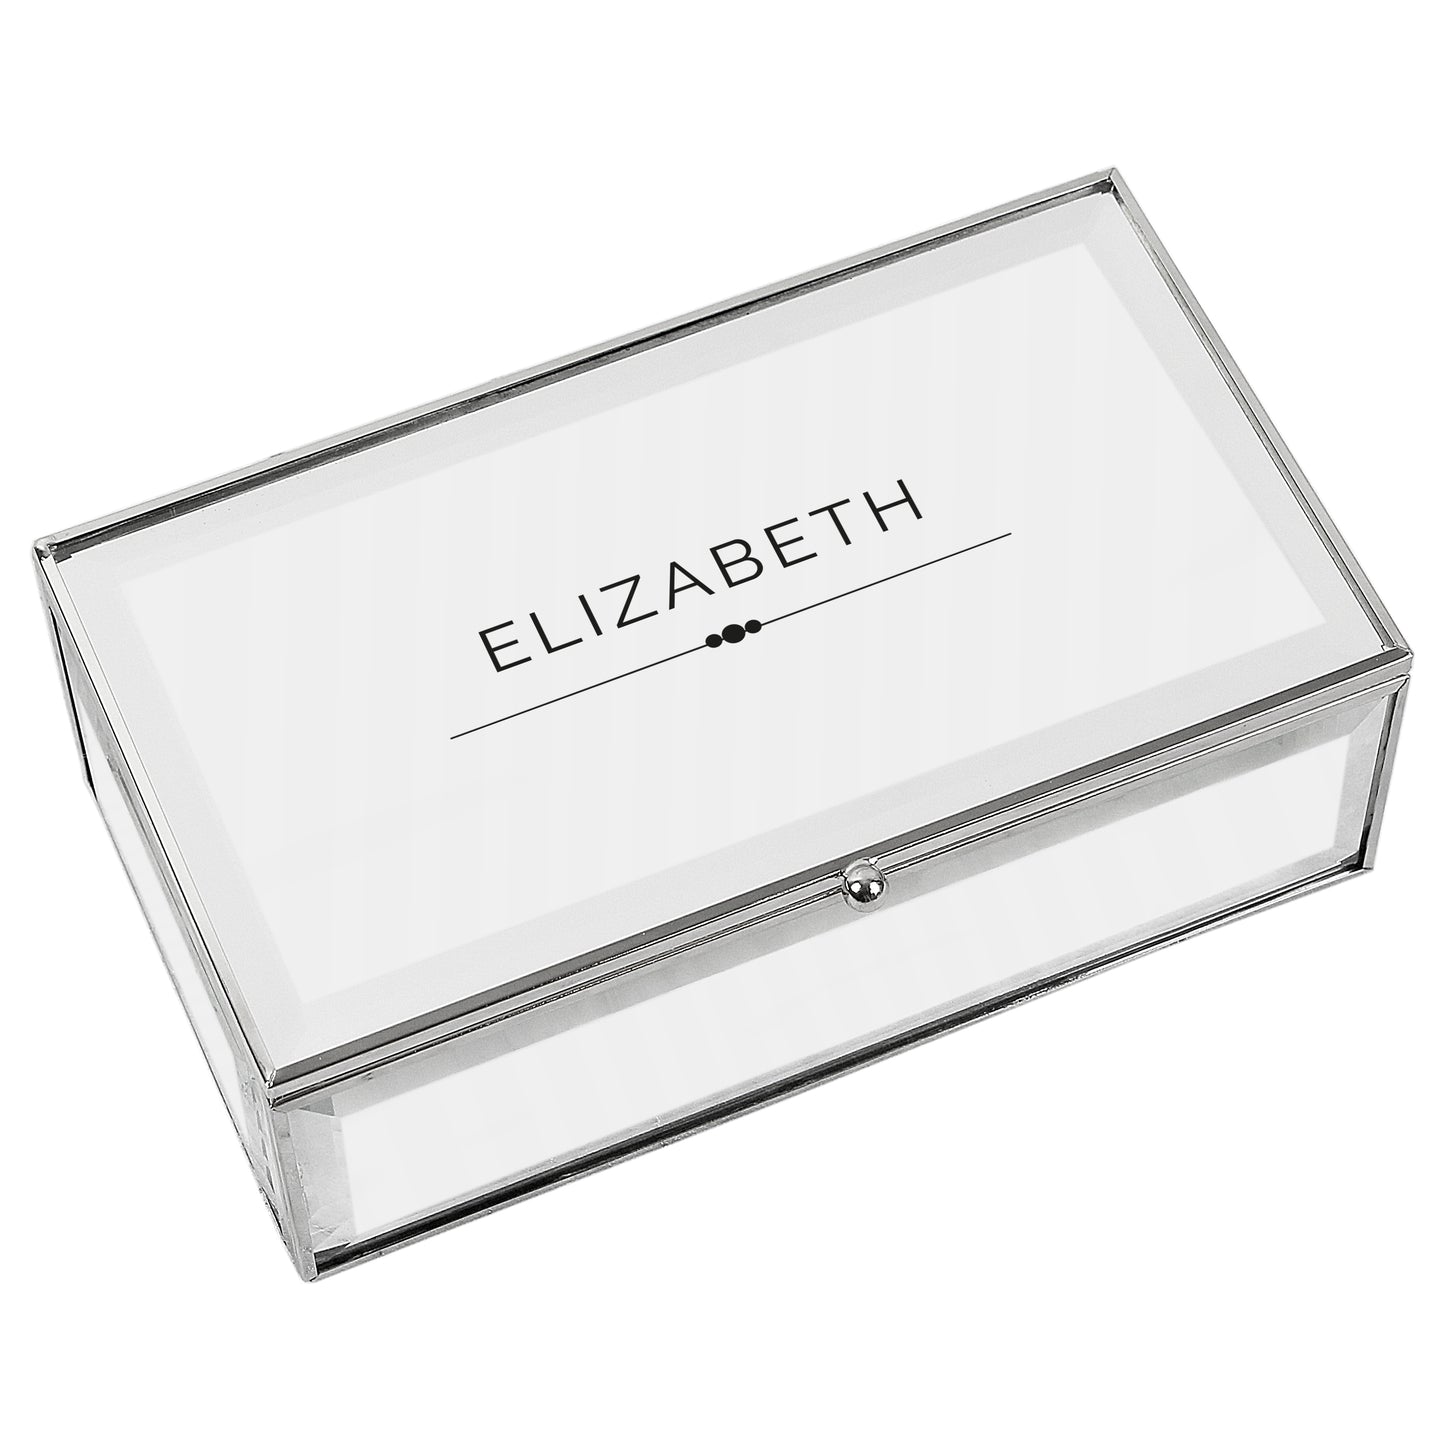 Personalised Classic Mirrored Jewellery Box